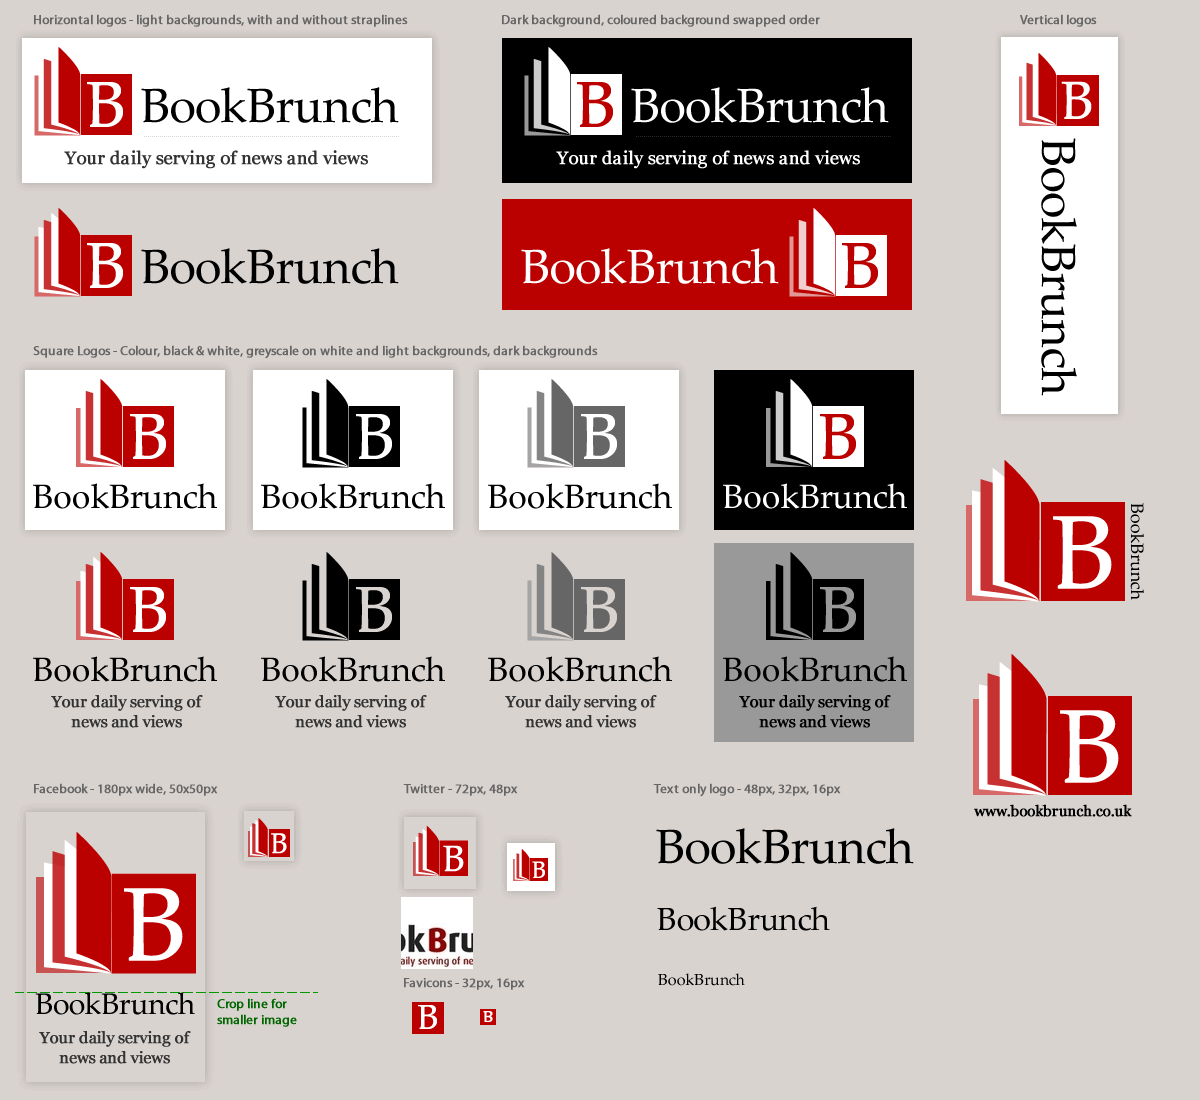 BookBrunch logo in different formats